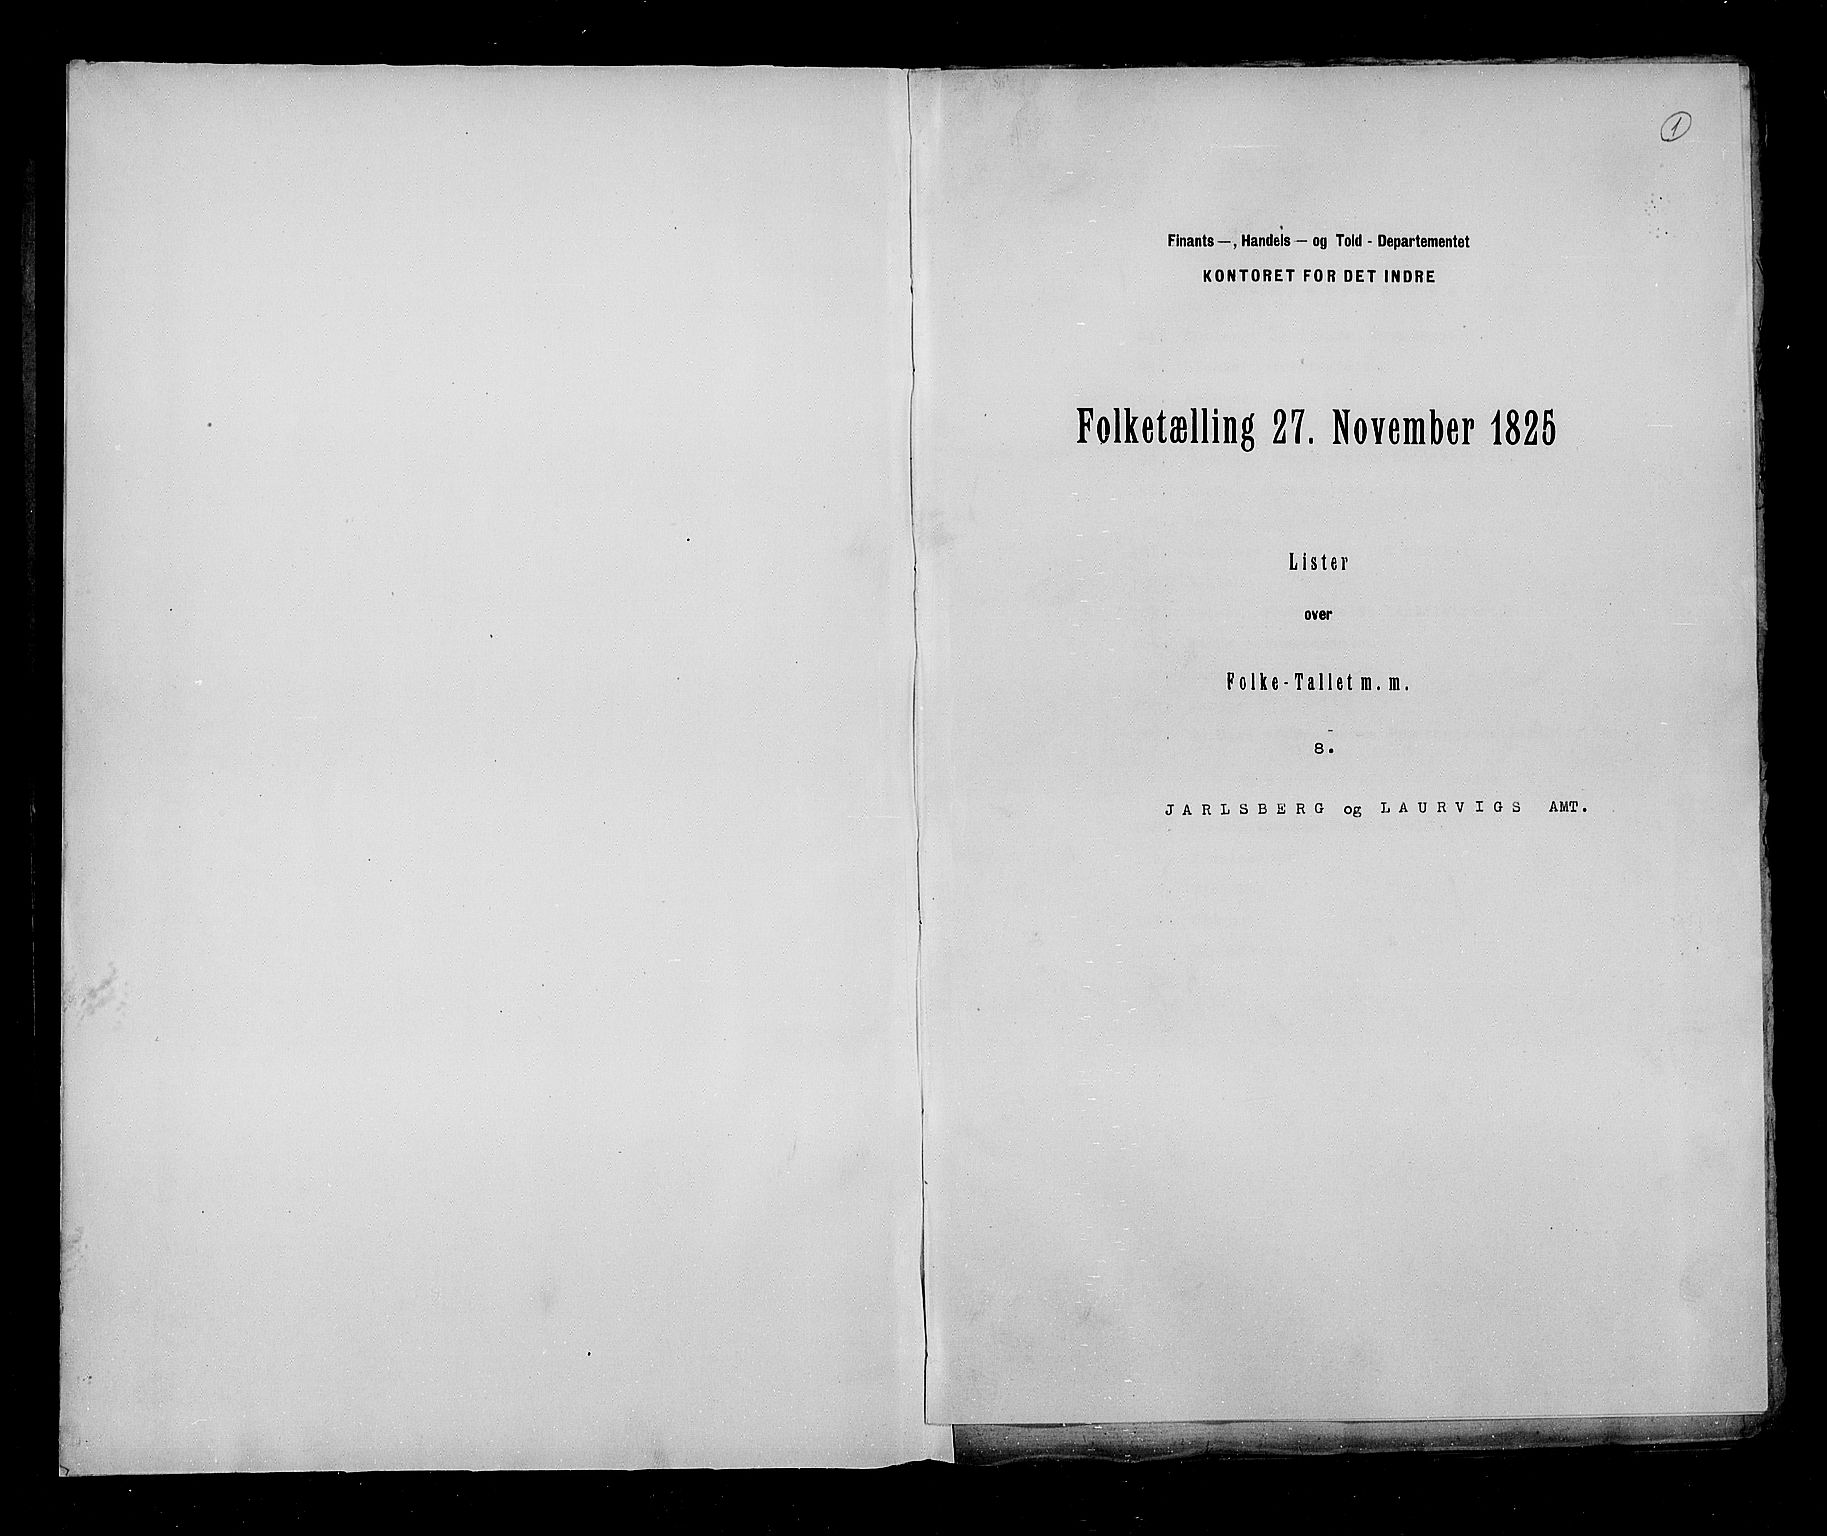 RA, Folketellingen 1825, bind 8: Jarlsberg og Larvik amt, 1825, s. 1